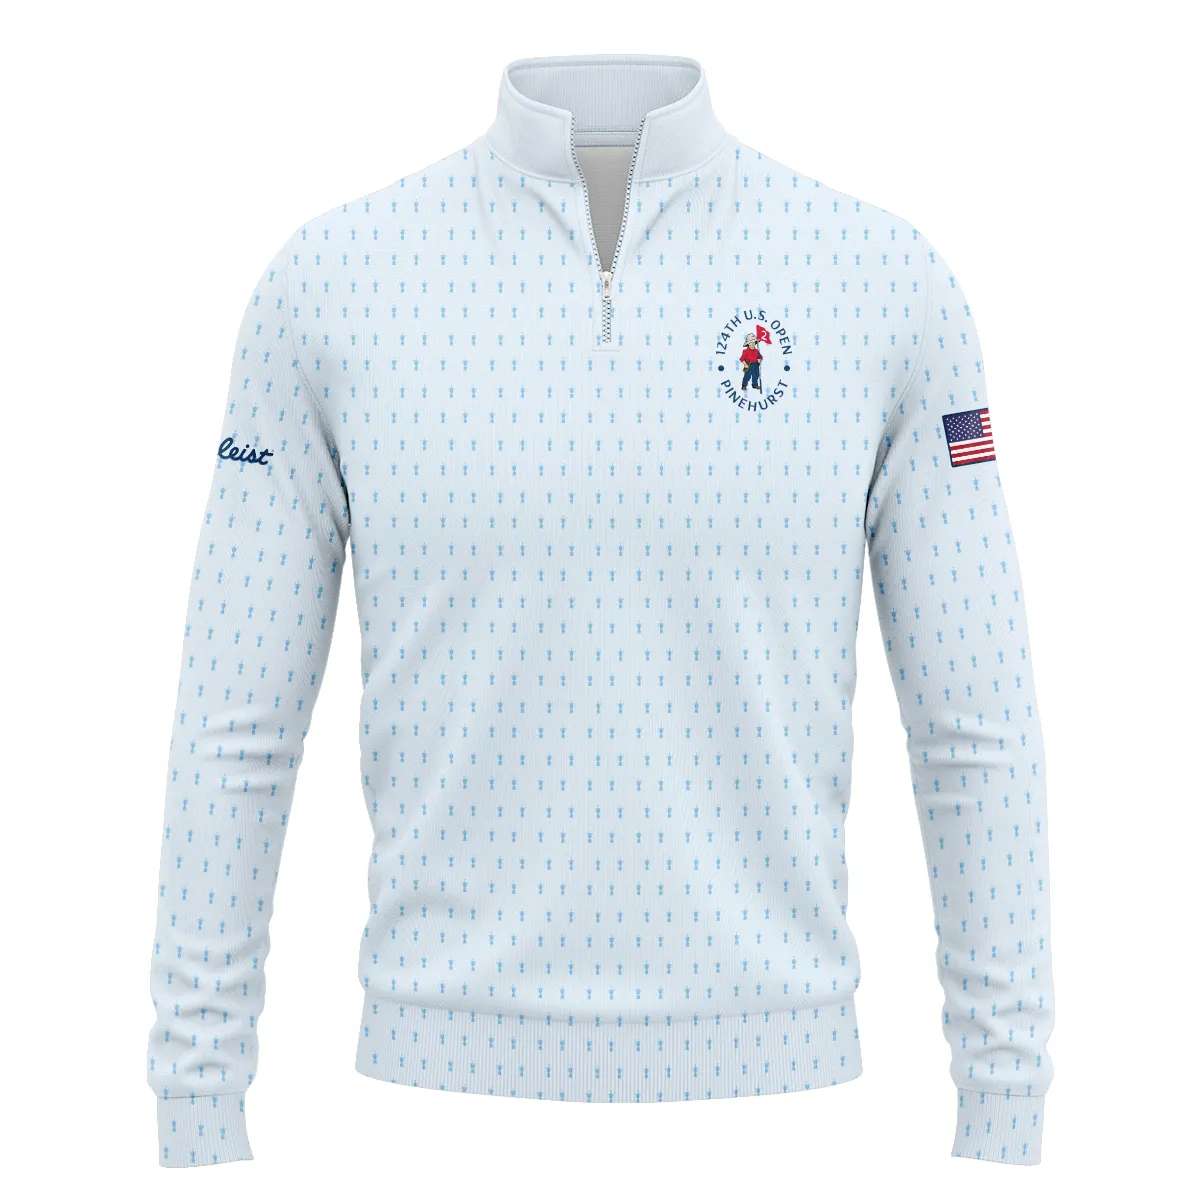 Golf Pattern Light Blue Cup 124th U.S. Open Pinehurst Titleist Polo Shirt Style Classic